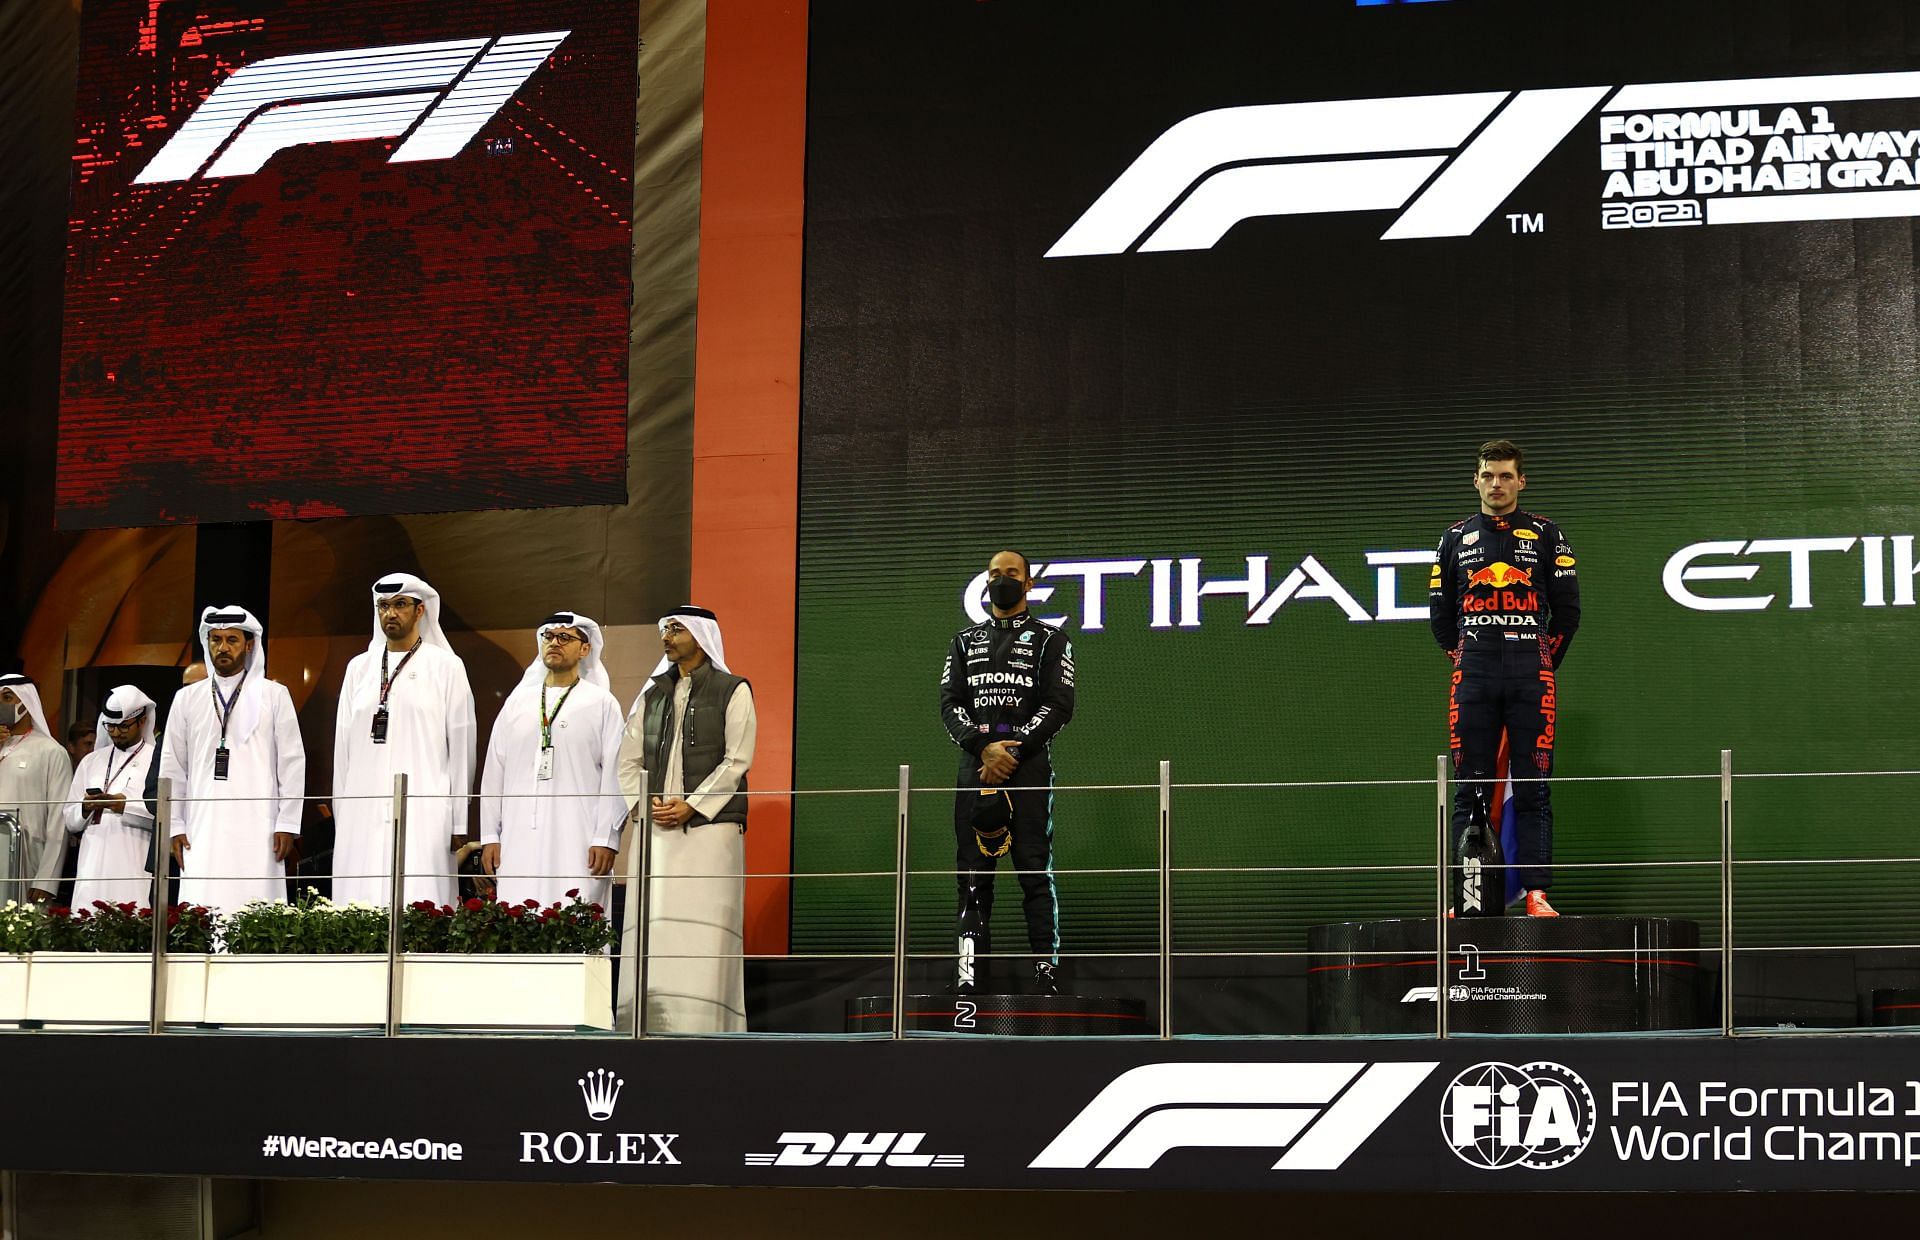 F1 Grand Prix of Abu Dhabi - Lewis Hamilton narrowly loses to Max Verstappen.